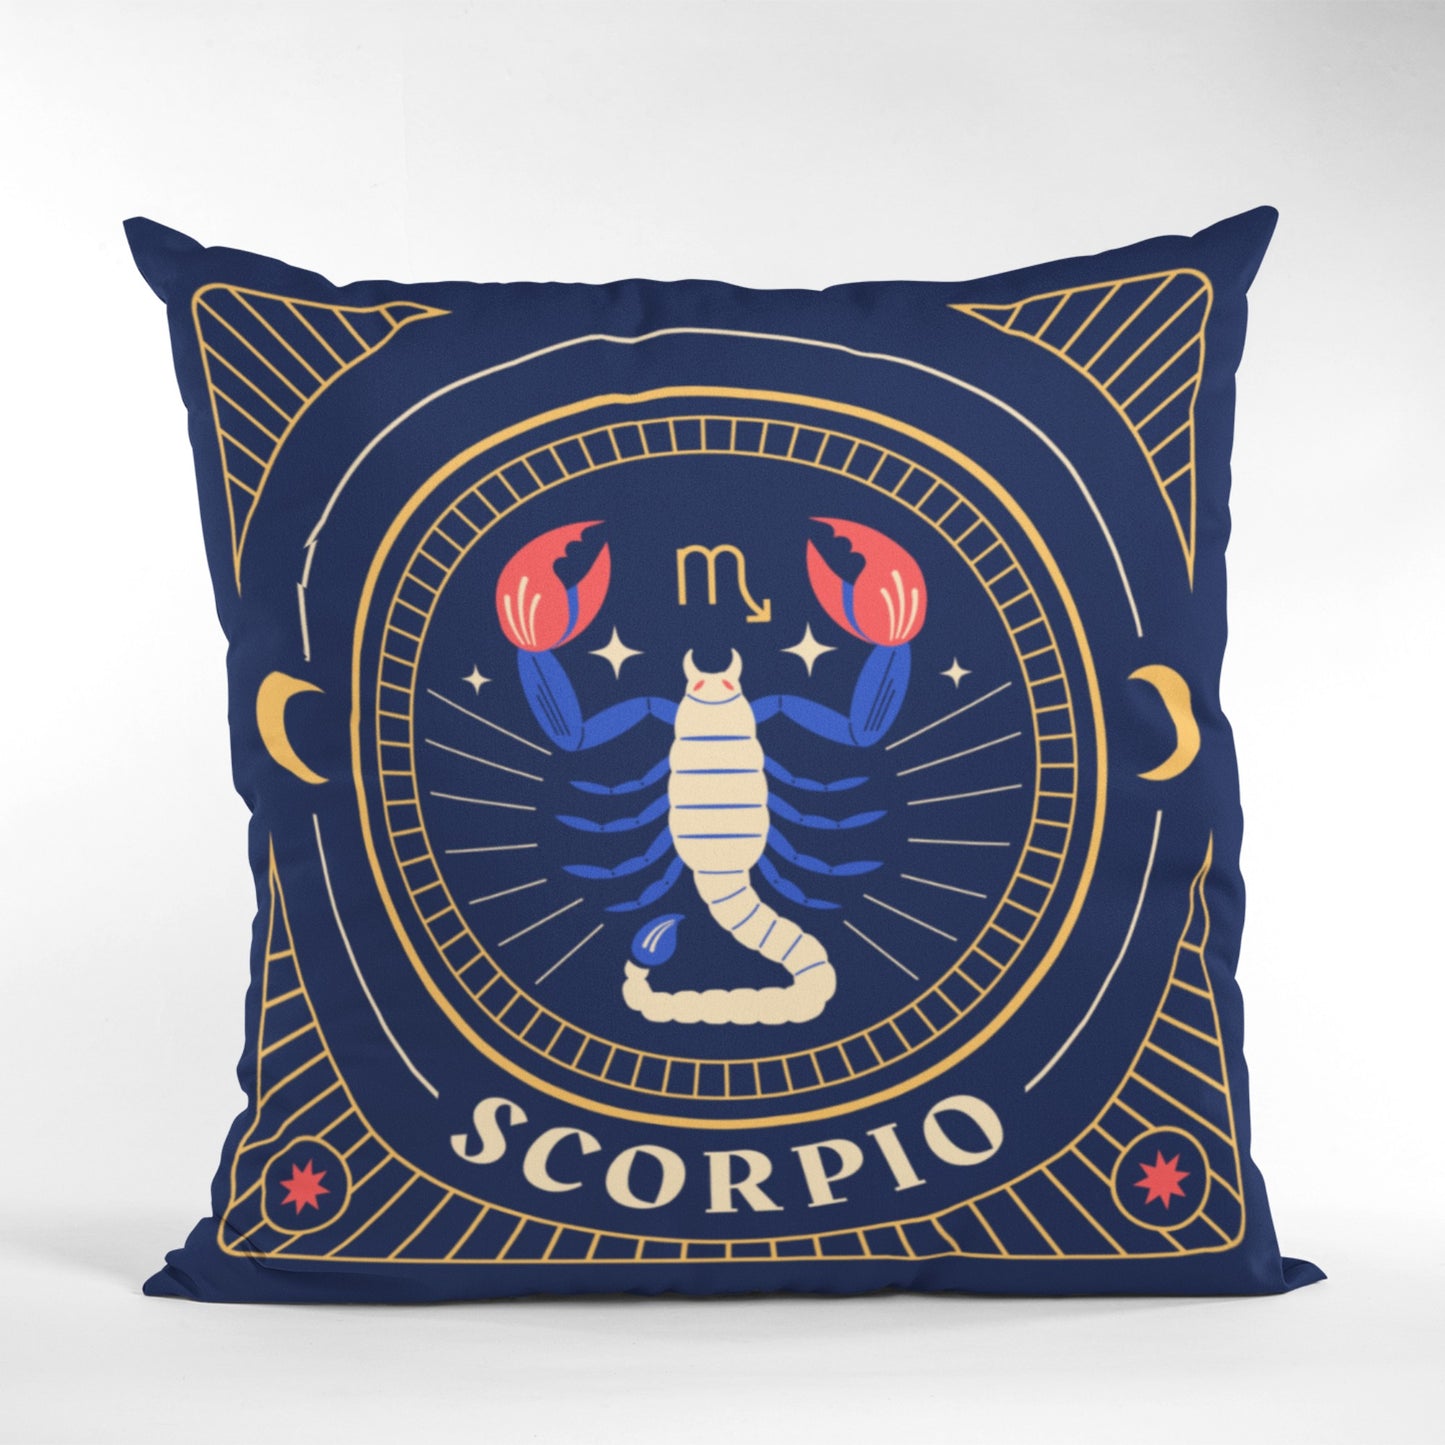 Scorpio Horoscope Printed Cushion Cover